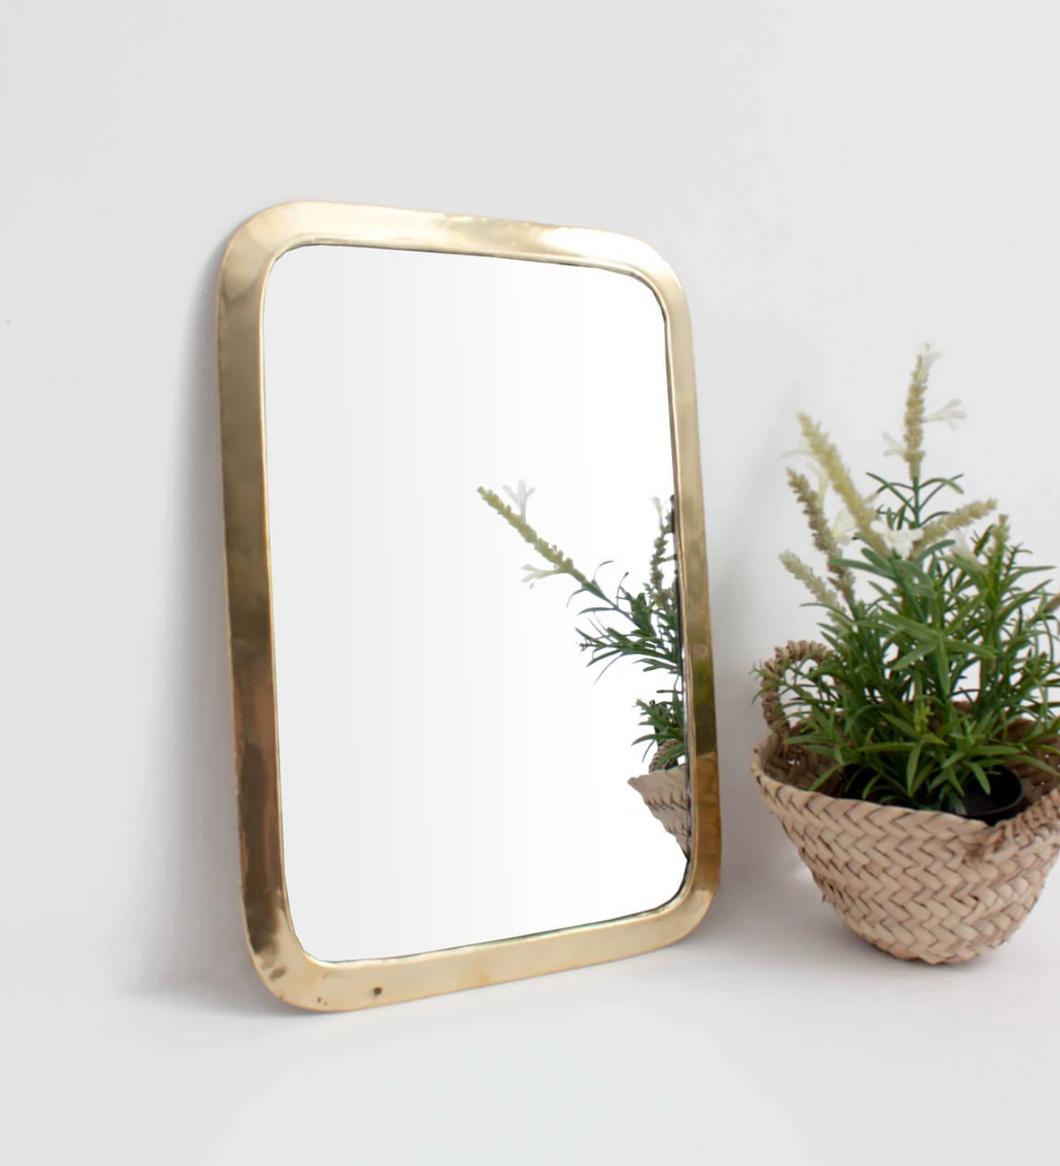 Handmade brass rimmed mirror made in Morocco